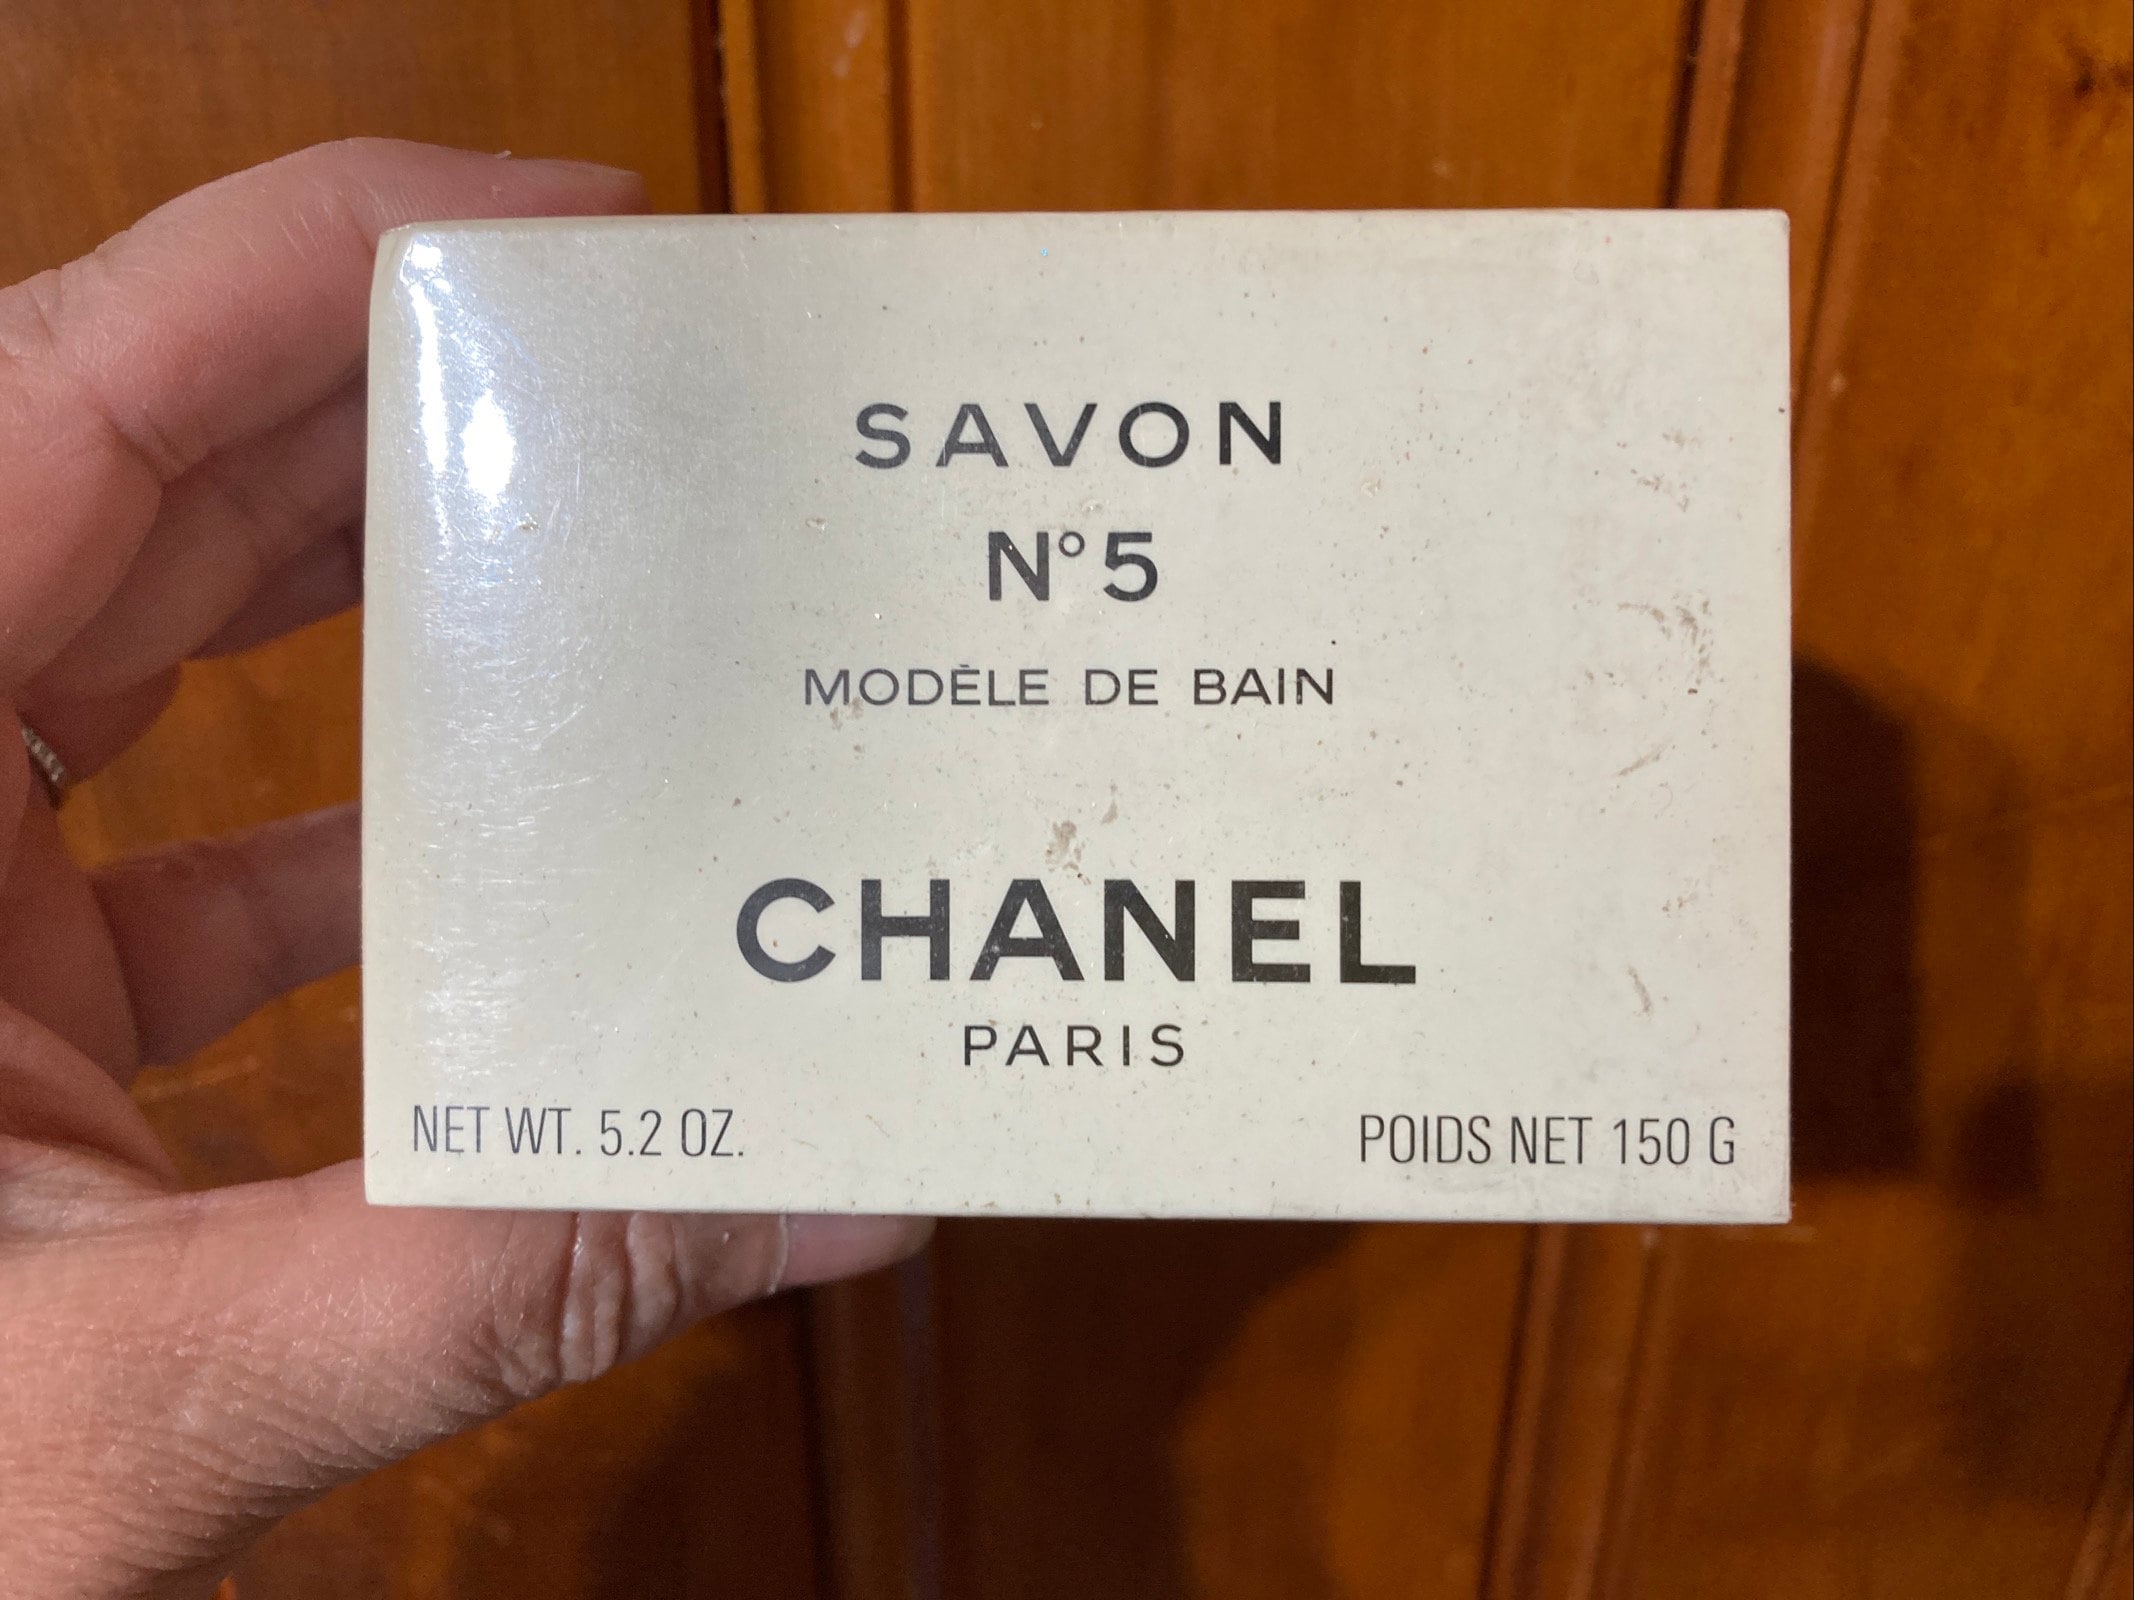 chanel 5 soap bar